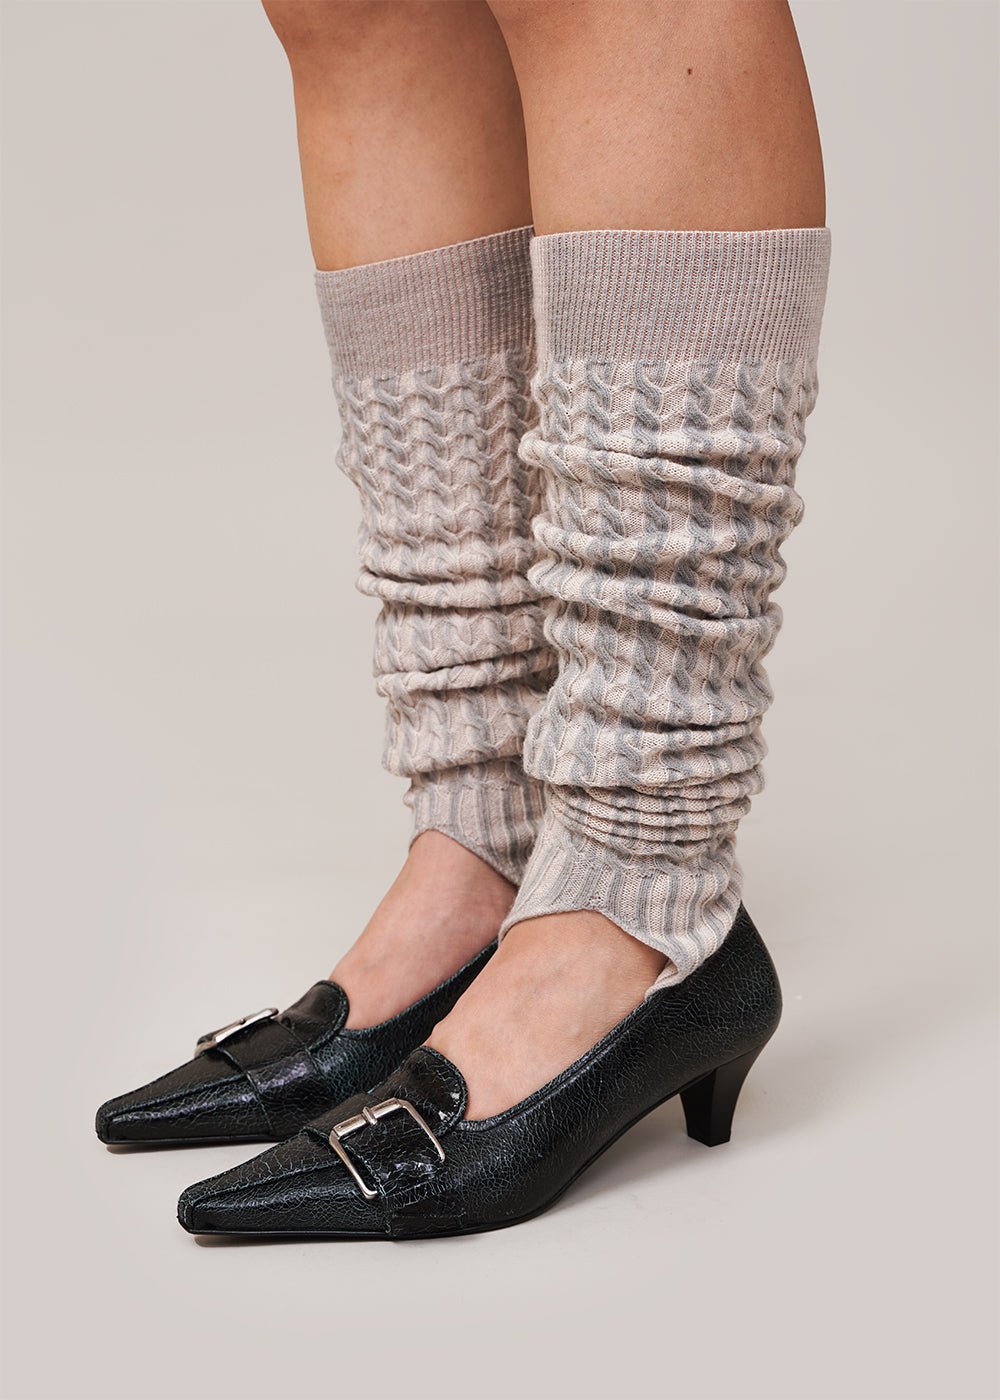 Grey wool gaiters for women, warm leggings. Wool leg warmers